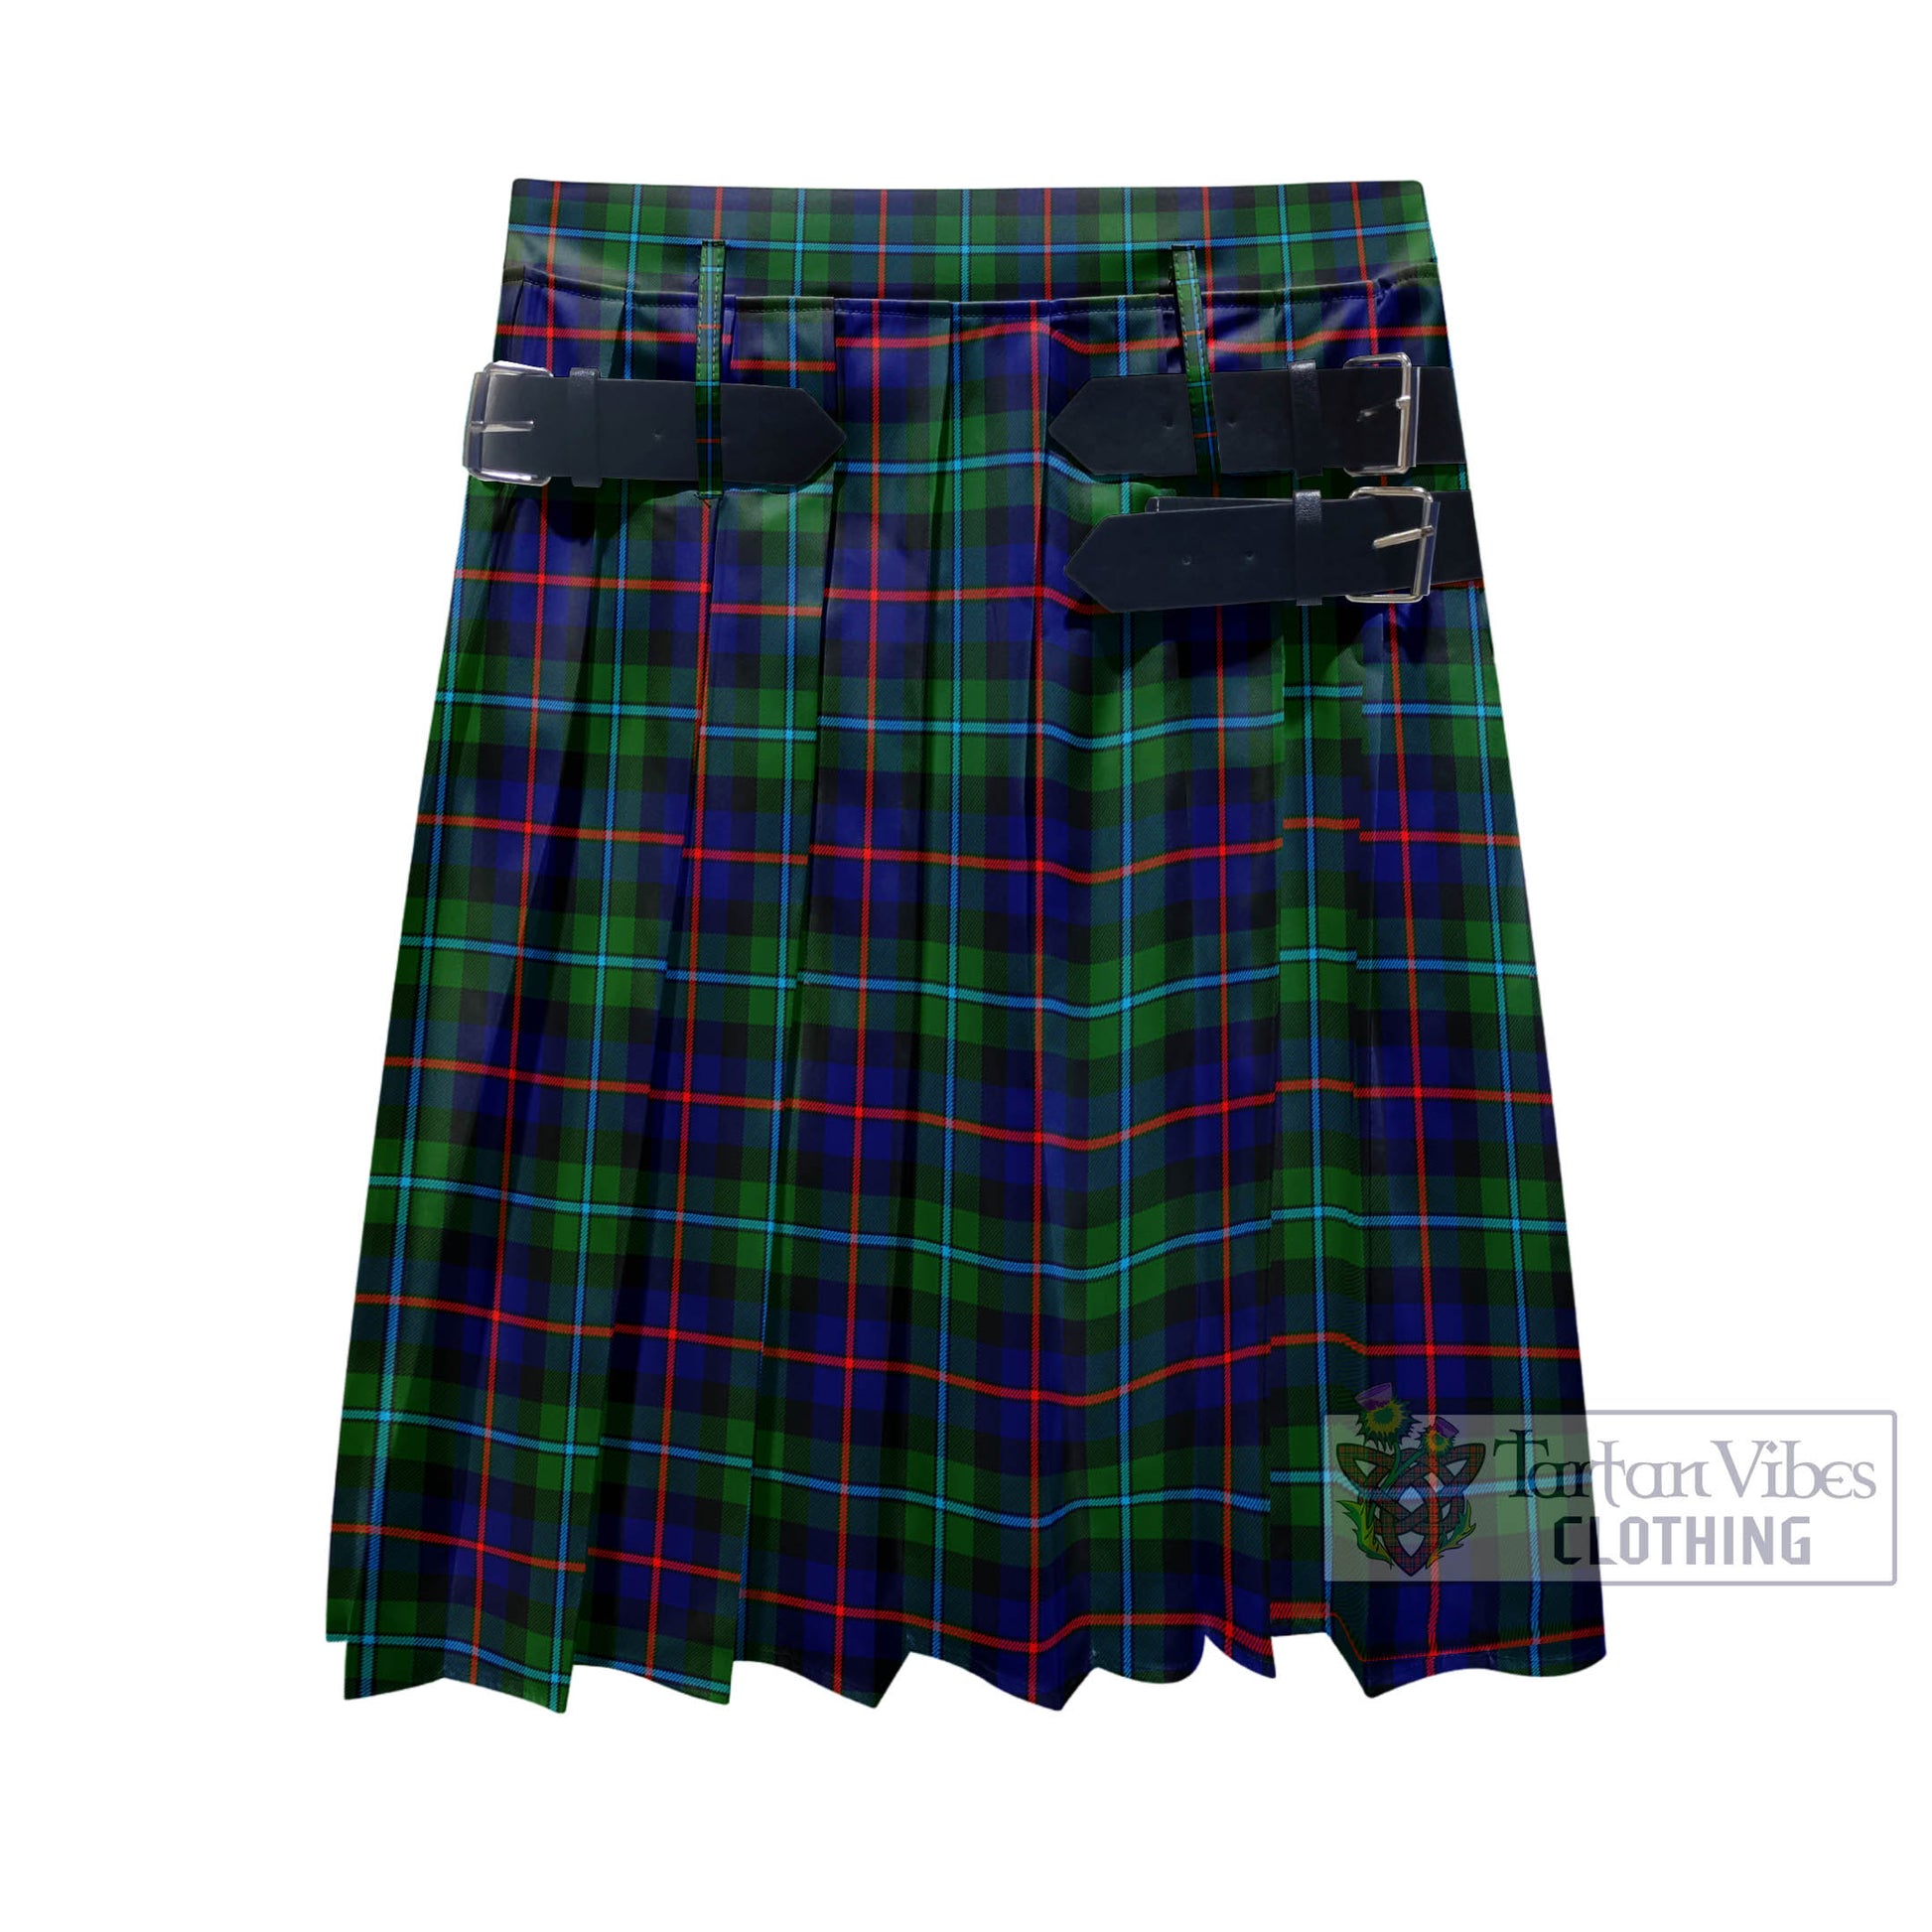 Tartan Vibes Clothing Calder Modern Tartan Men's Pleated Skirt - Fashion Casual Retro Scottish Style